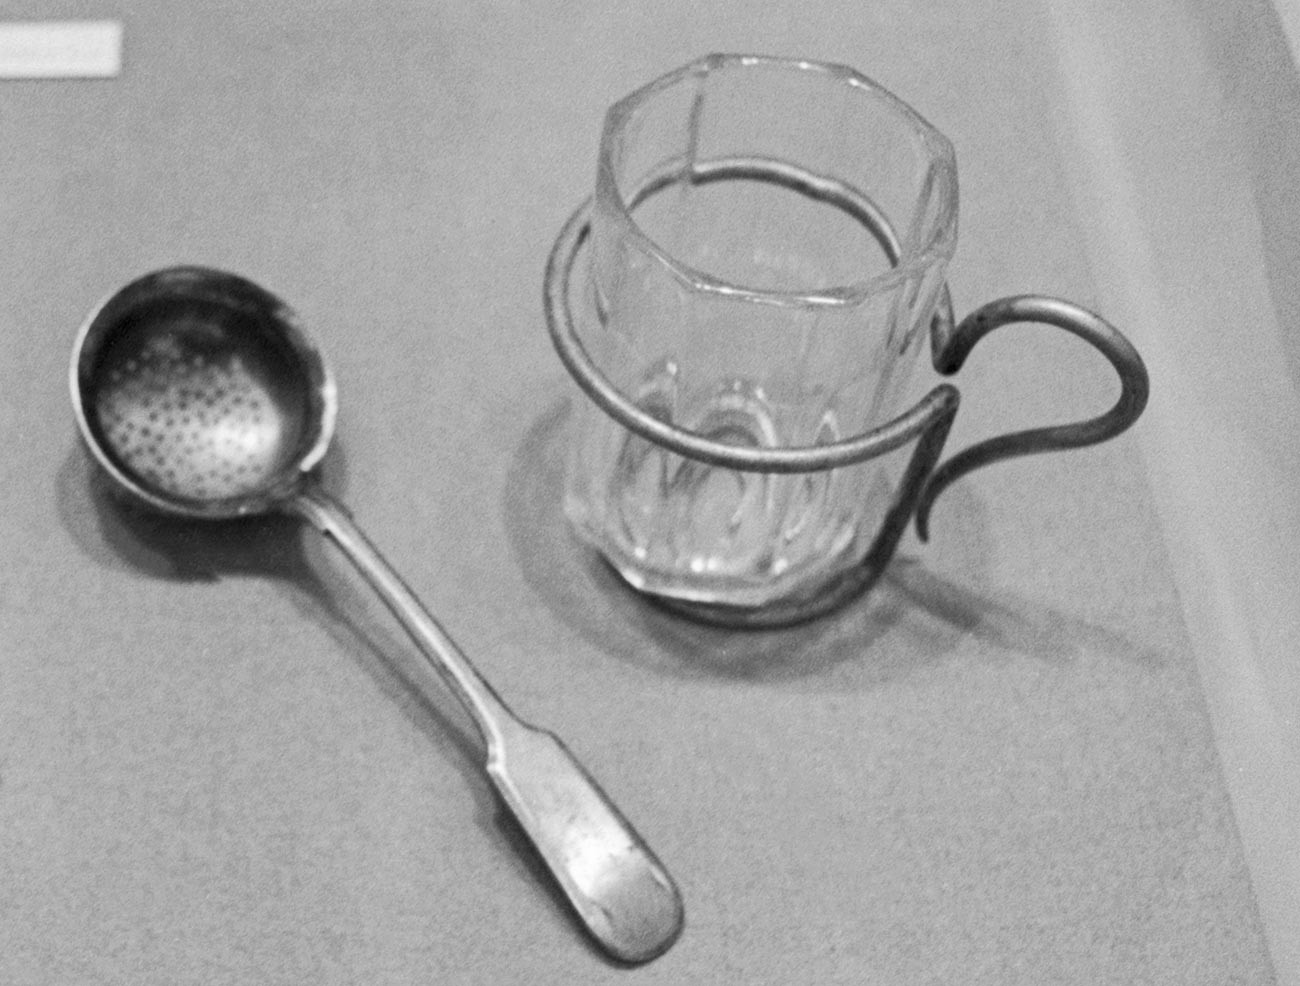 A teaspoon for brewing tea and a minimalist glass holder Vladimir Lenin used